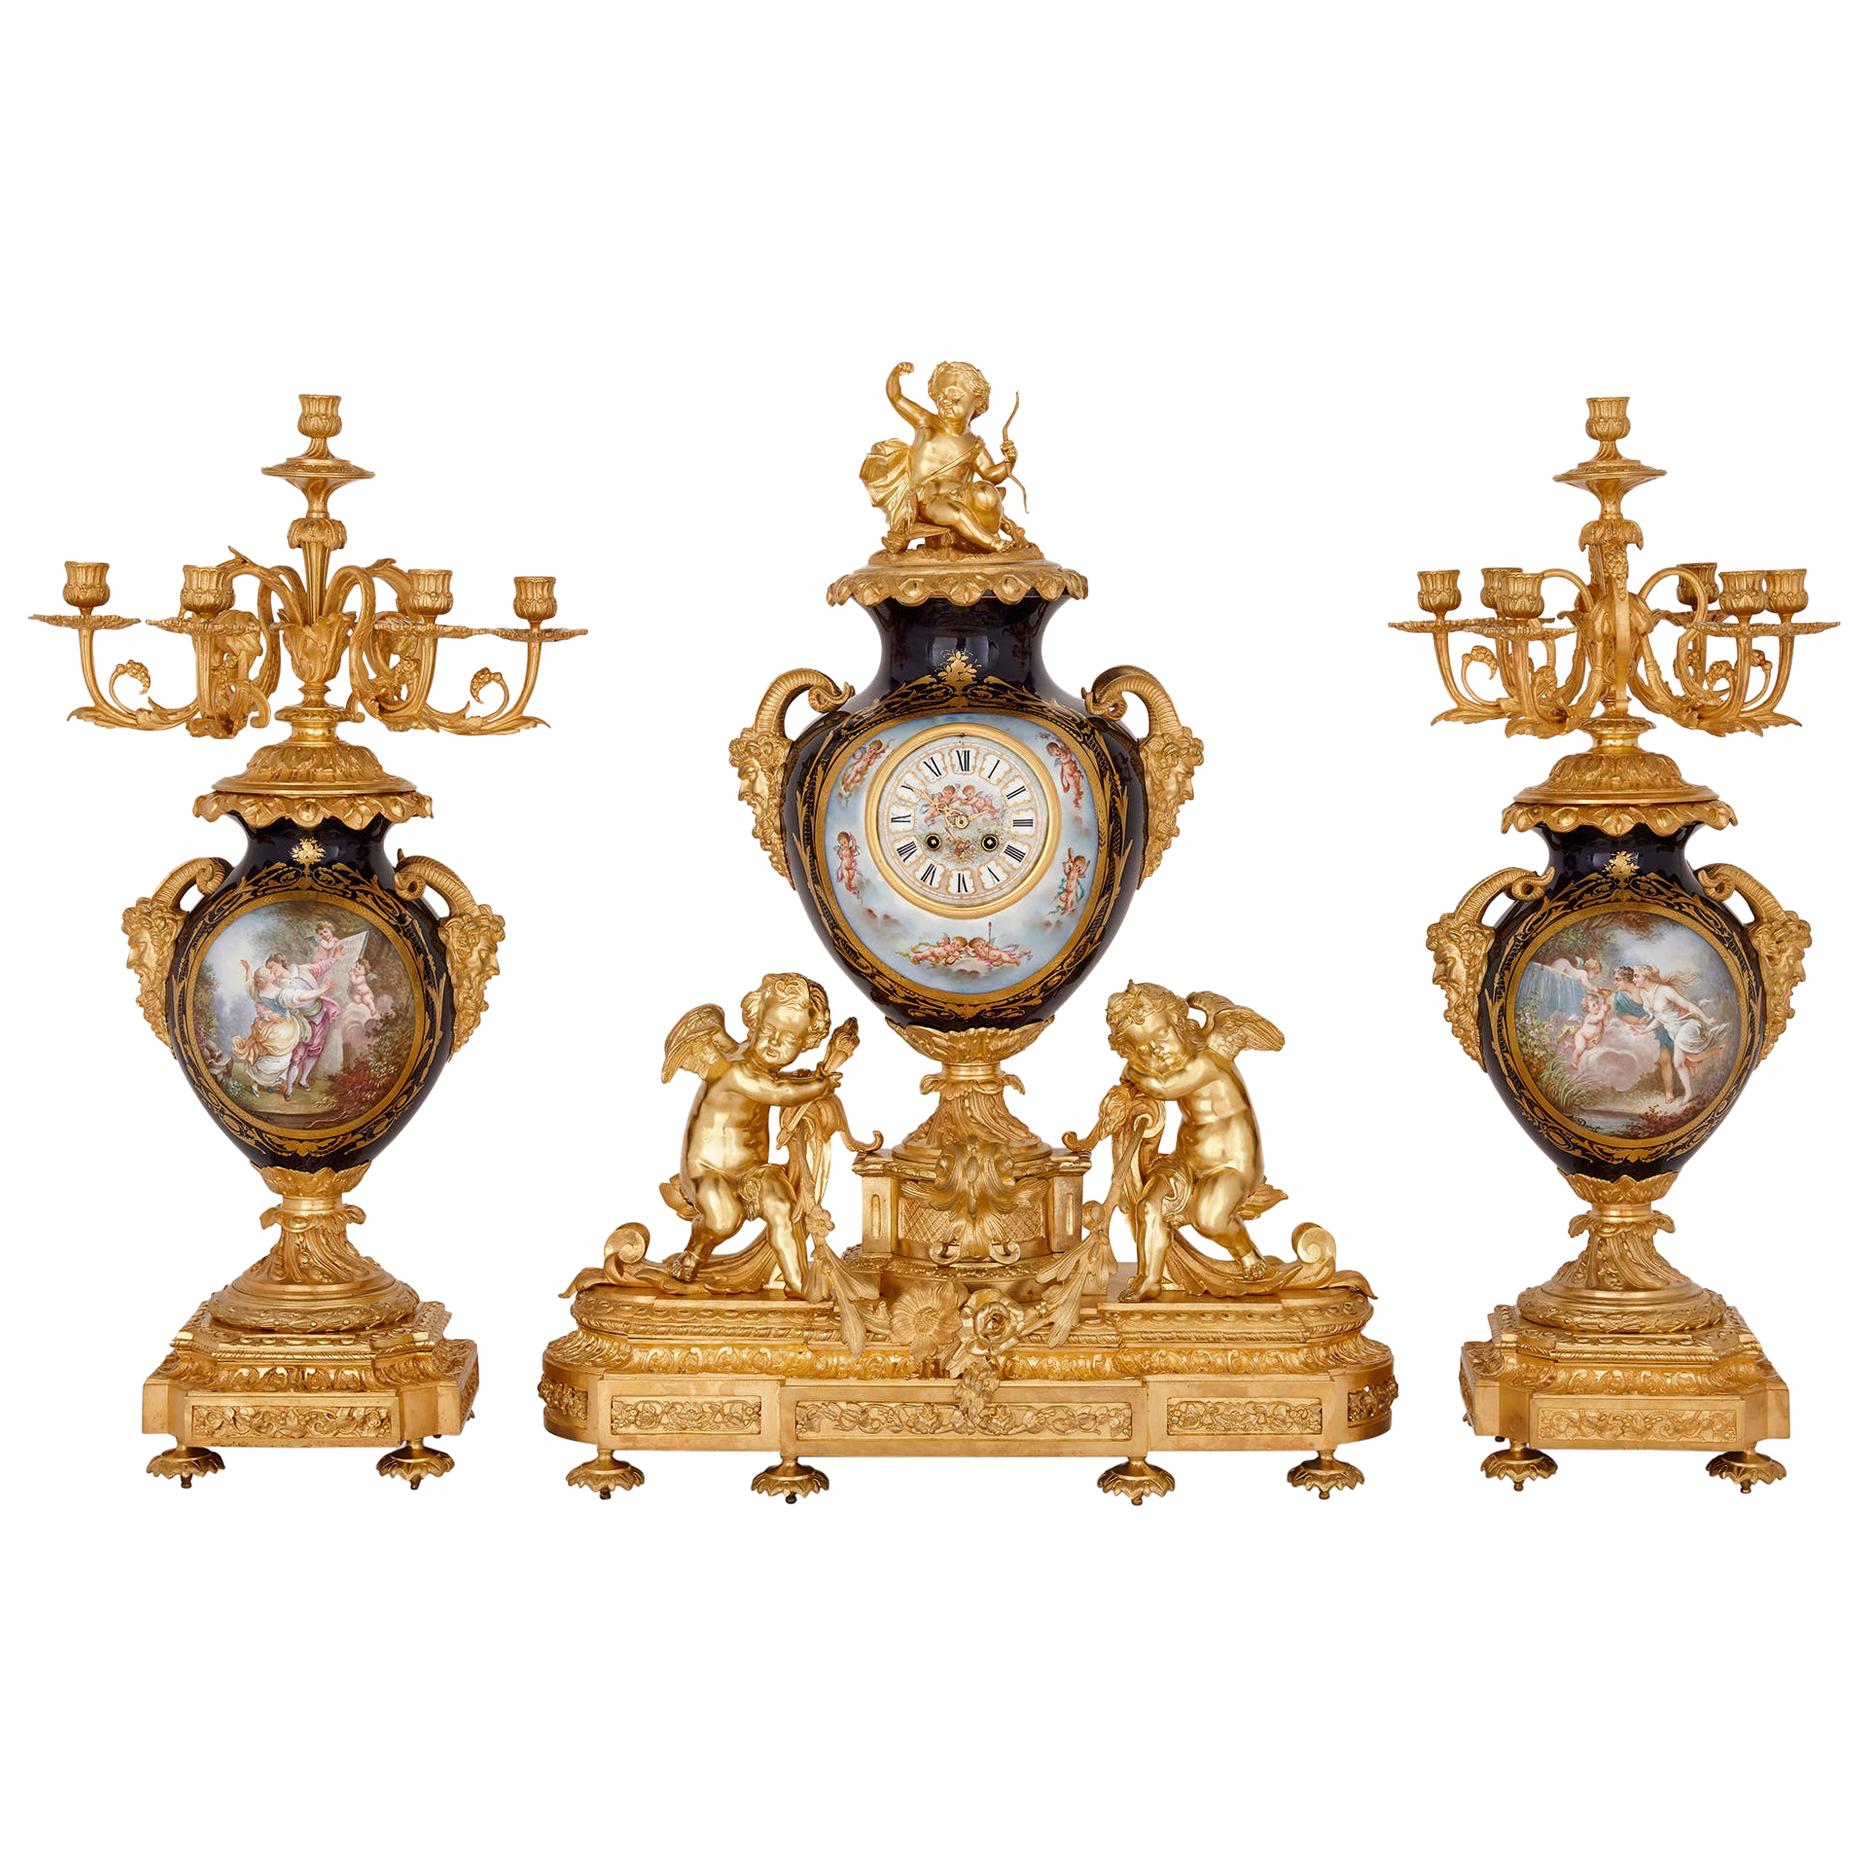 Three-Piece Louis XV Rococo Style Porcelain and Ormolu Clock Set